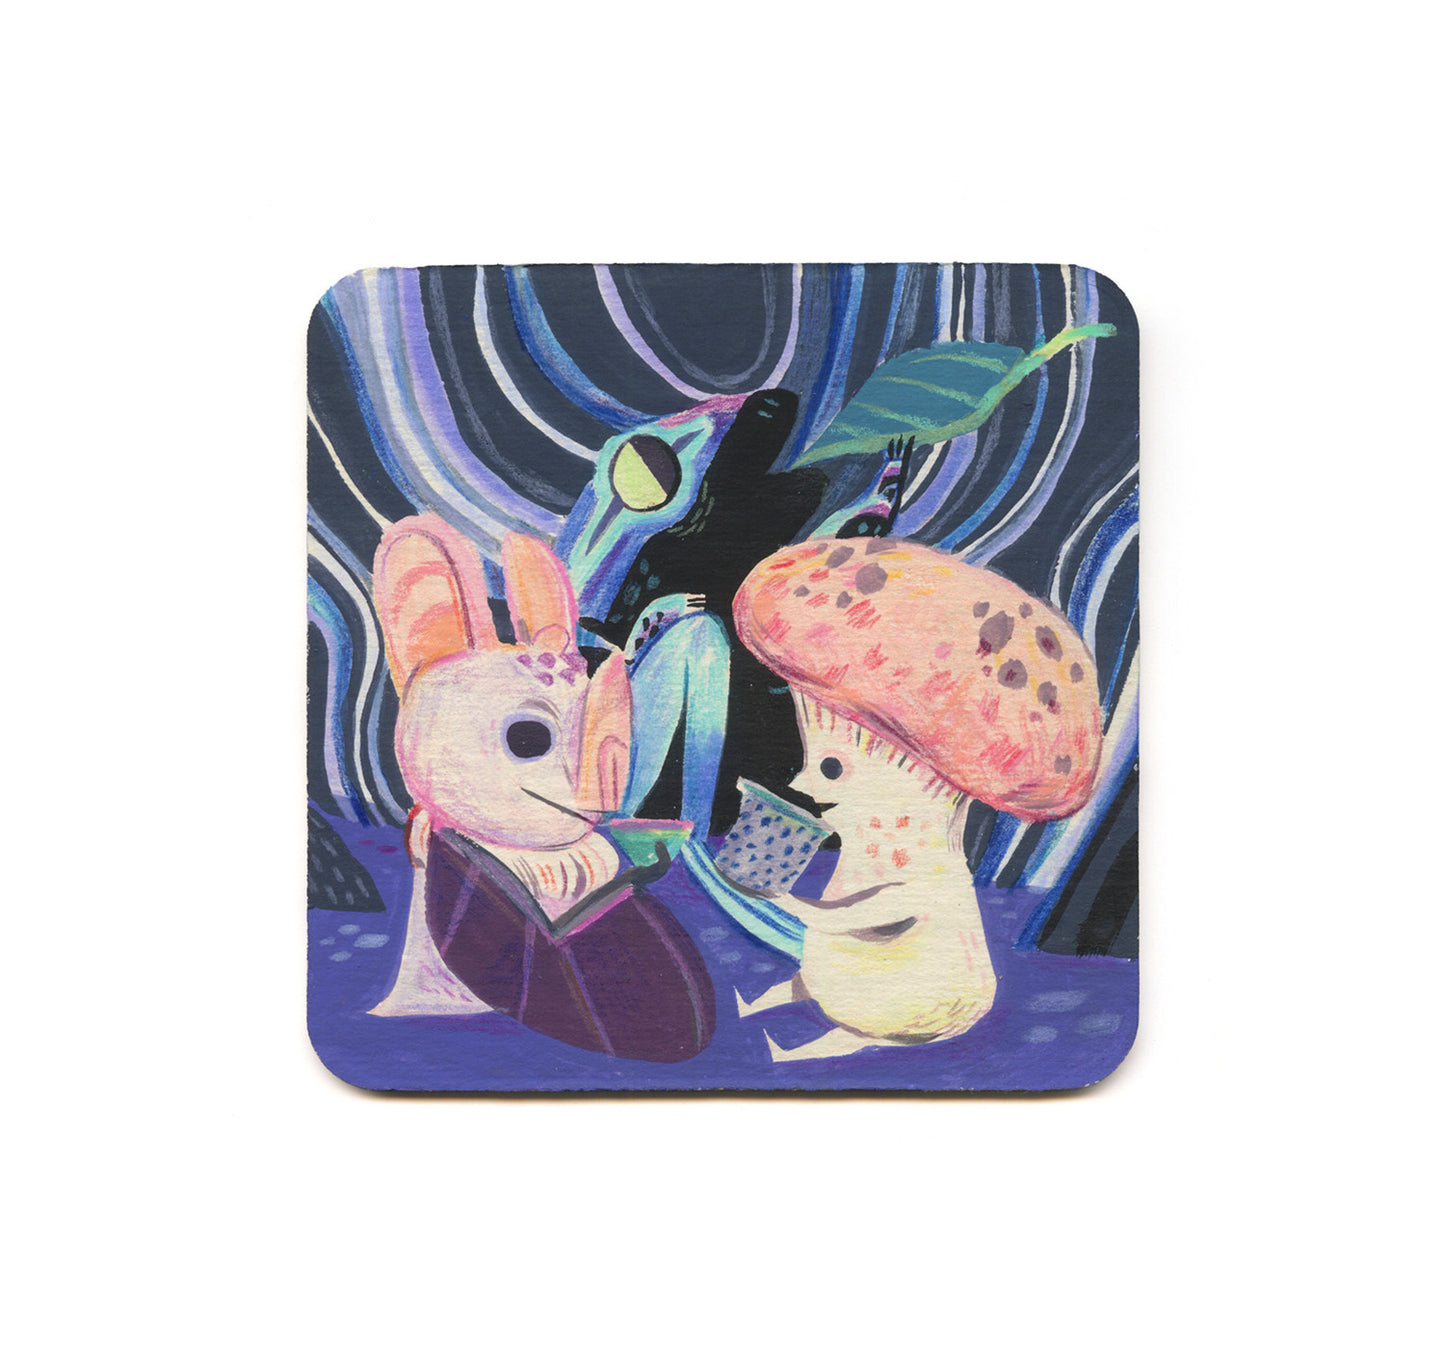 S1 Meg Hunt - Cave Creatures 3 Coaster